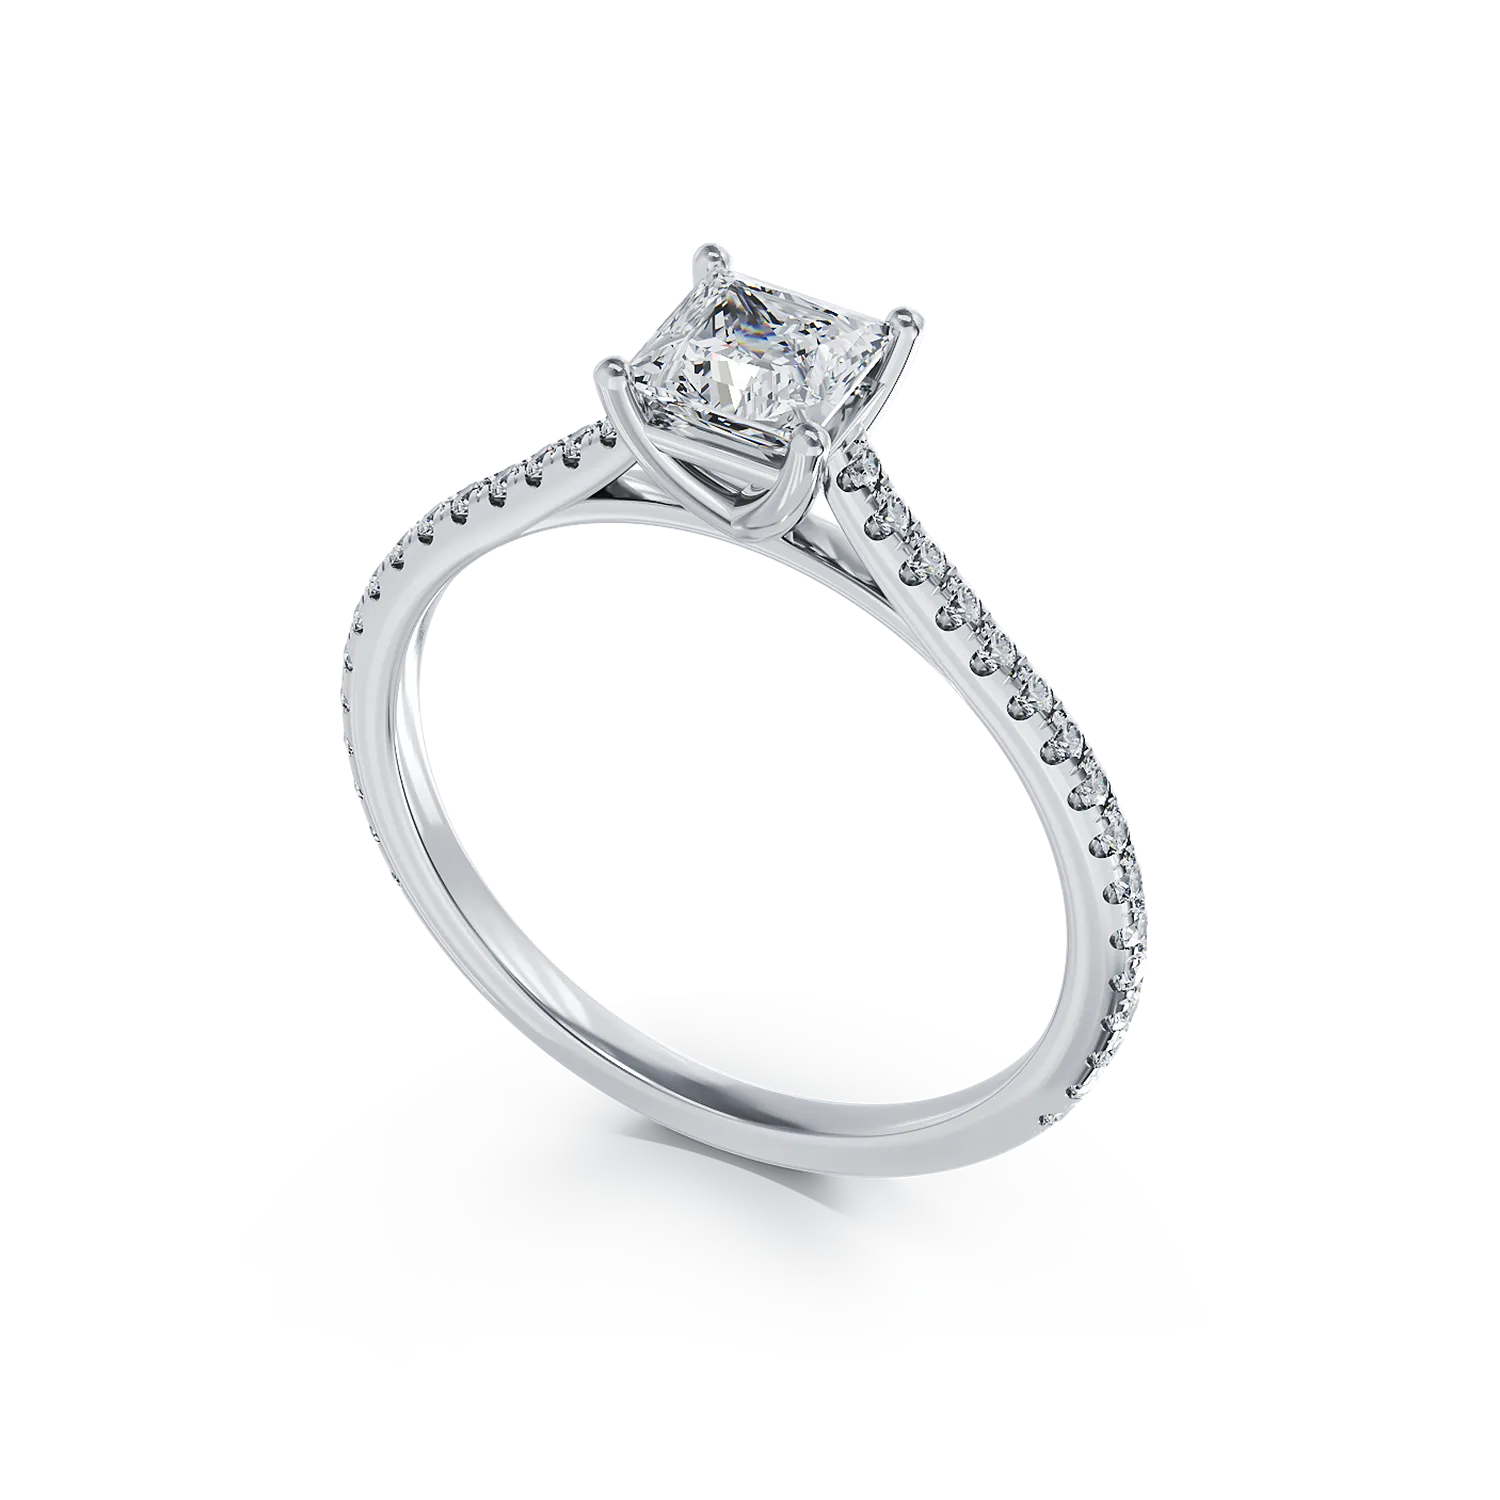 Platinum engagement ring with 0.6ct diamond and 0.19ct diamonds